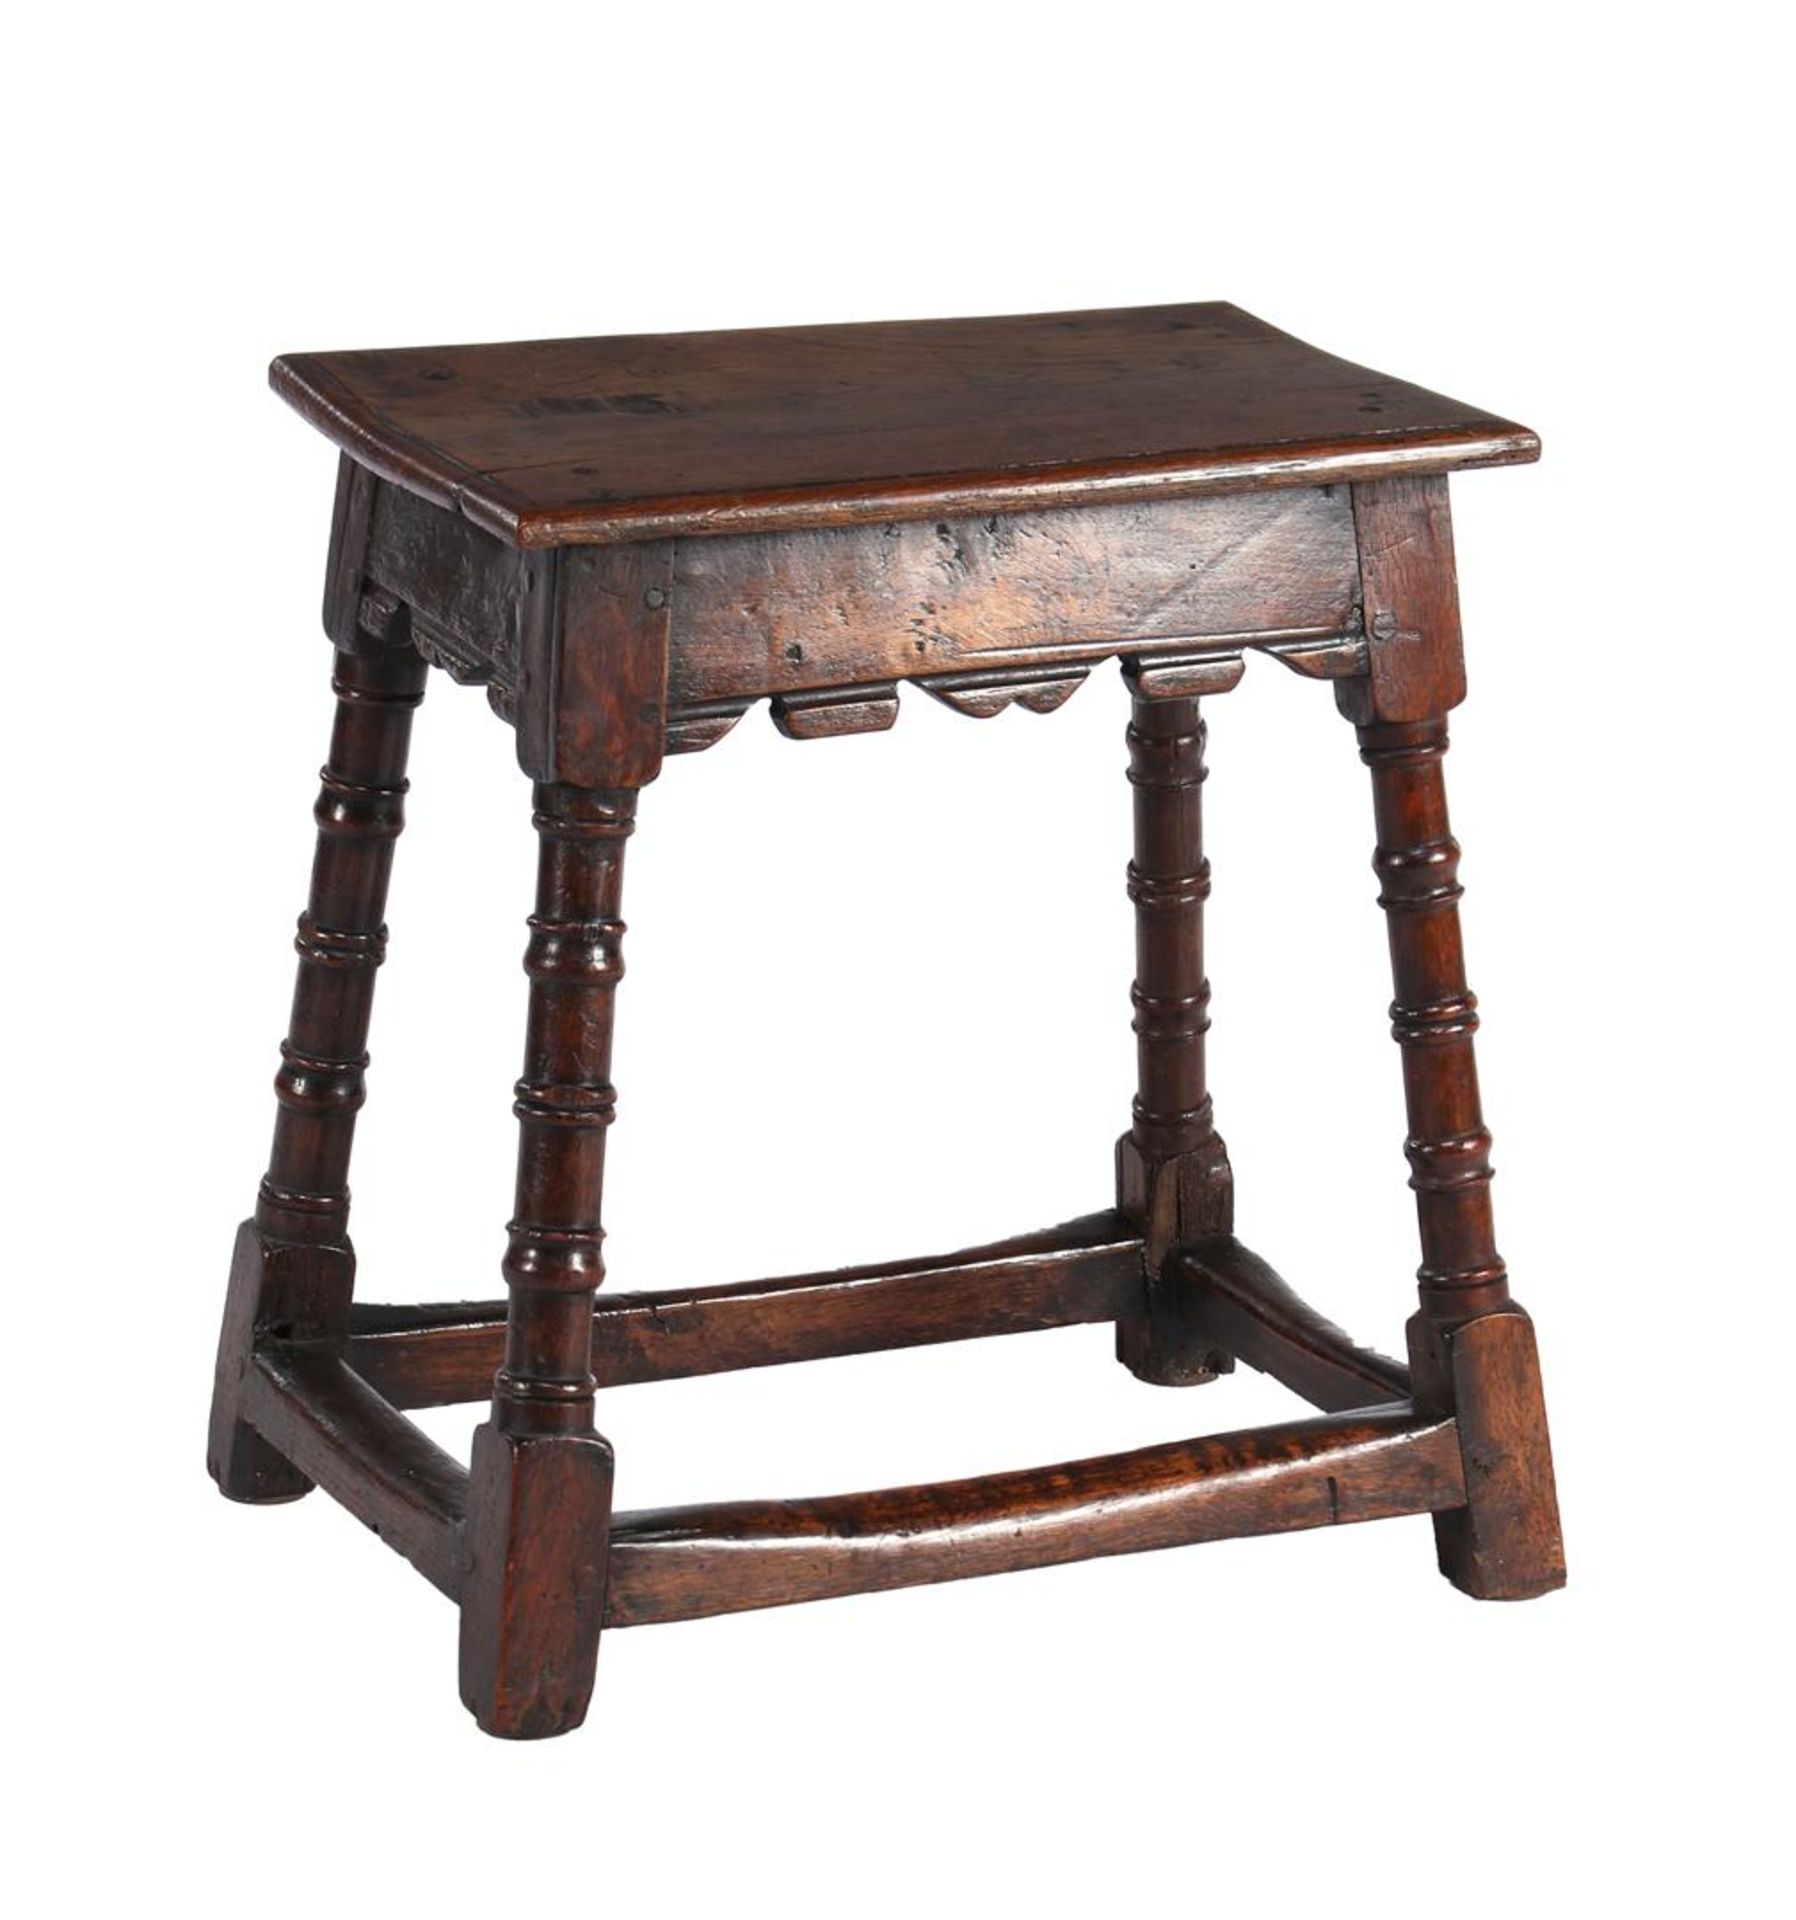 Antique oak "Joint stool"